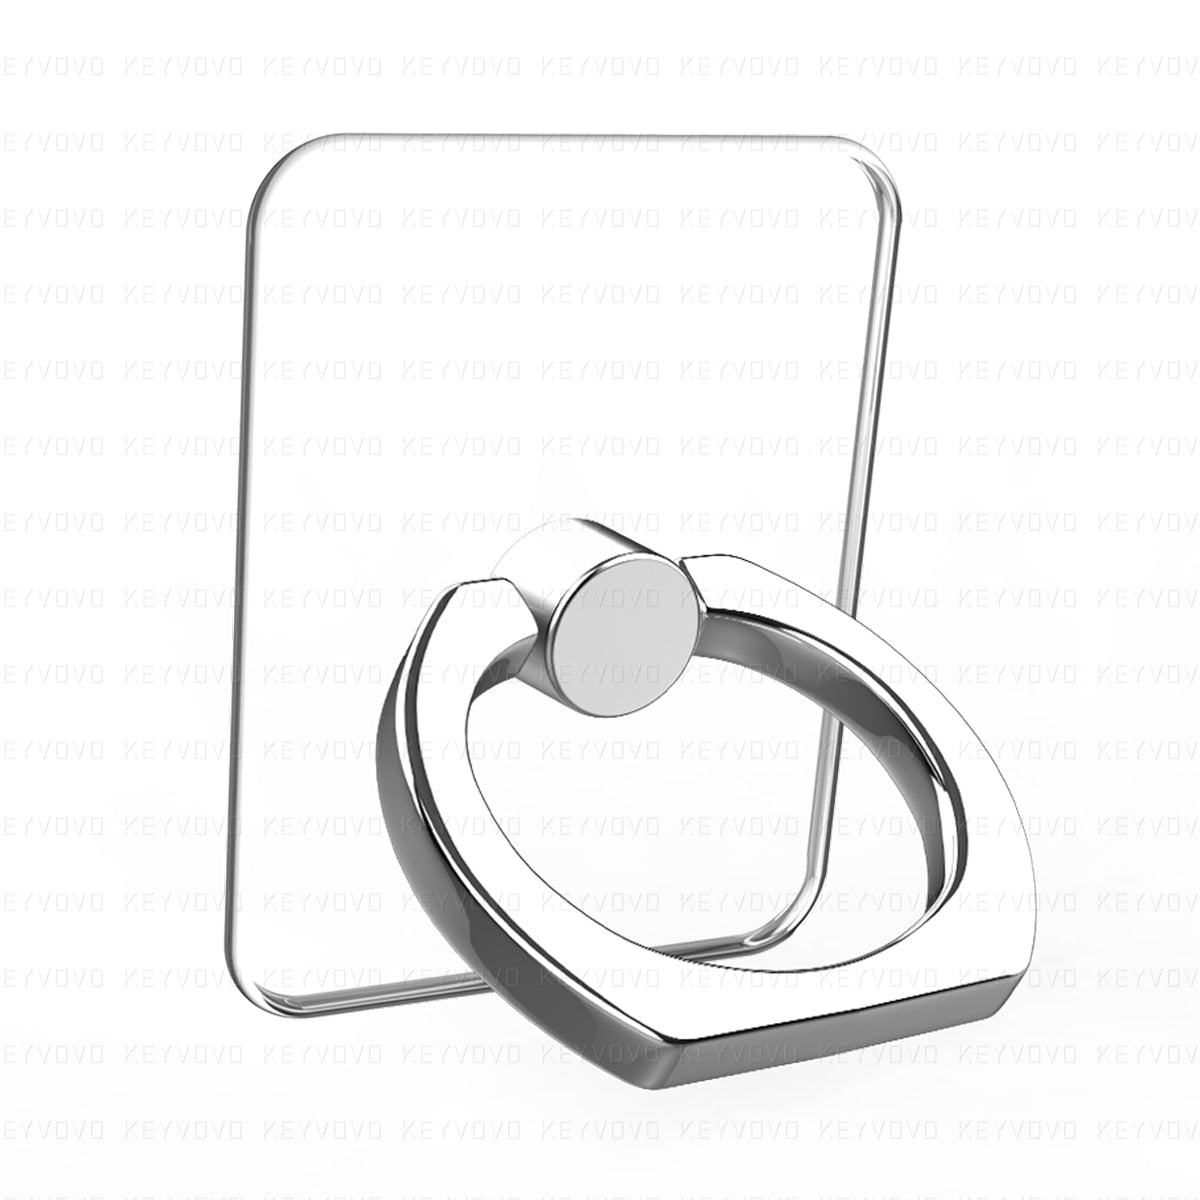 Keyvovo Cell Phone Kickstand Vertical Horizontal Stand Adjustable Mini Folding Desk Mount Holder for iPhone Samsung Xiaomi